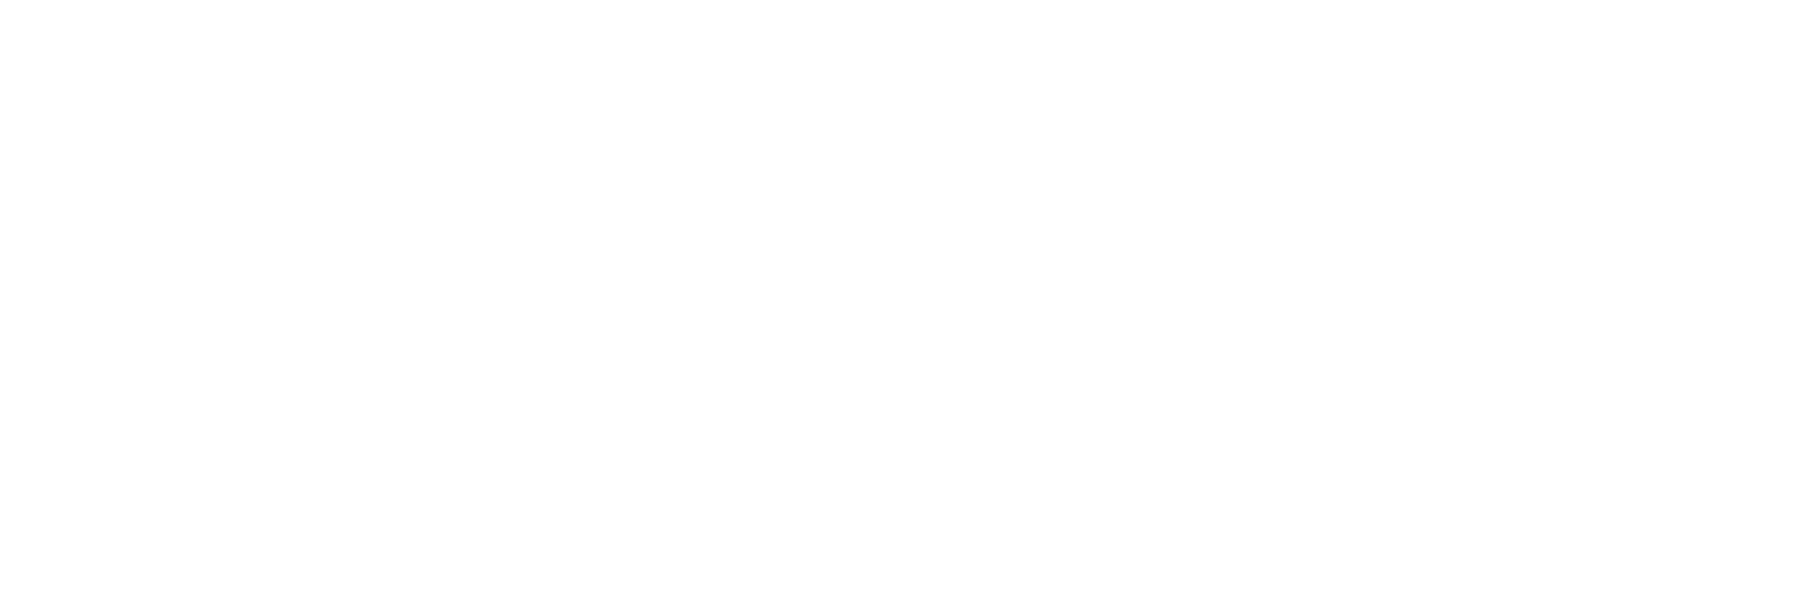 Polar Plunge Logo - Polar Plunge for Special Olympics Ontario